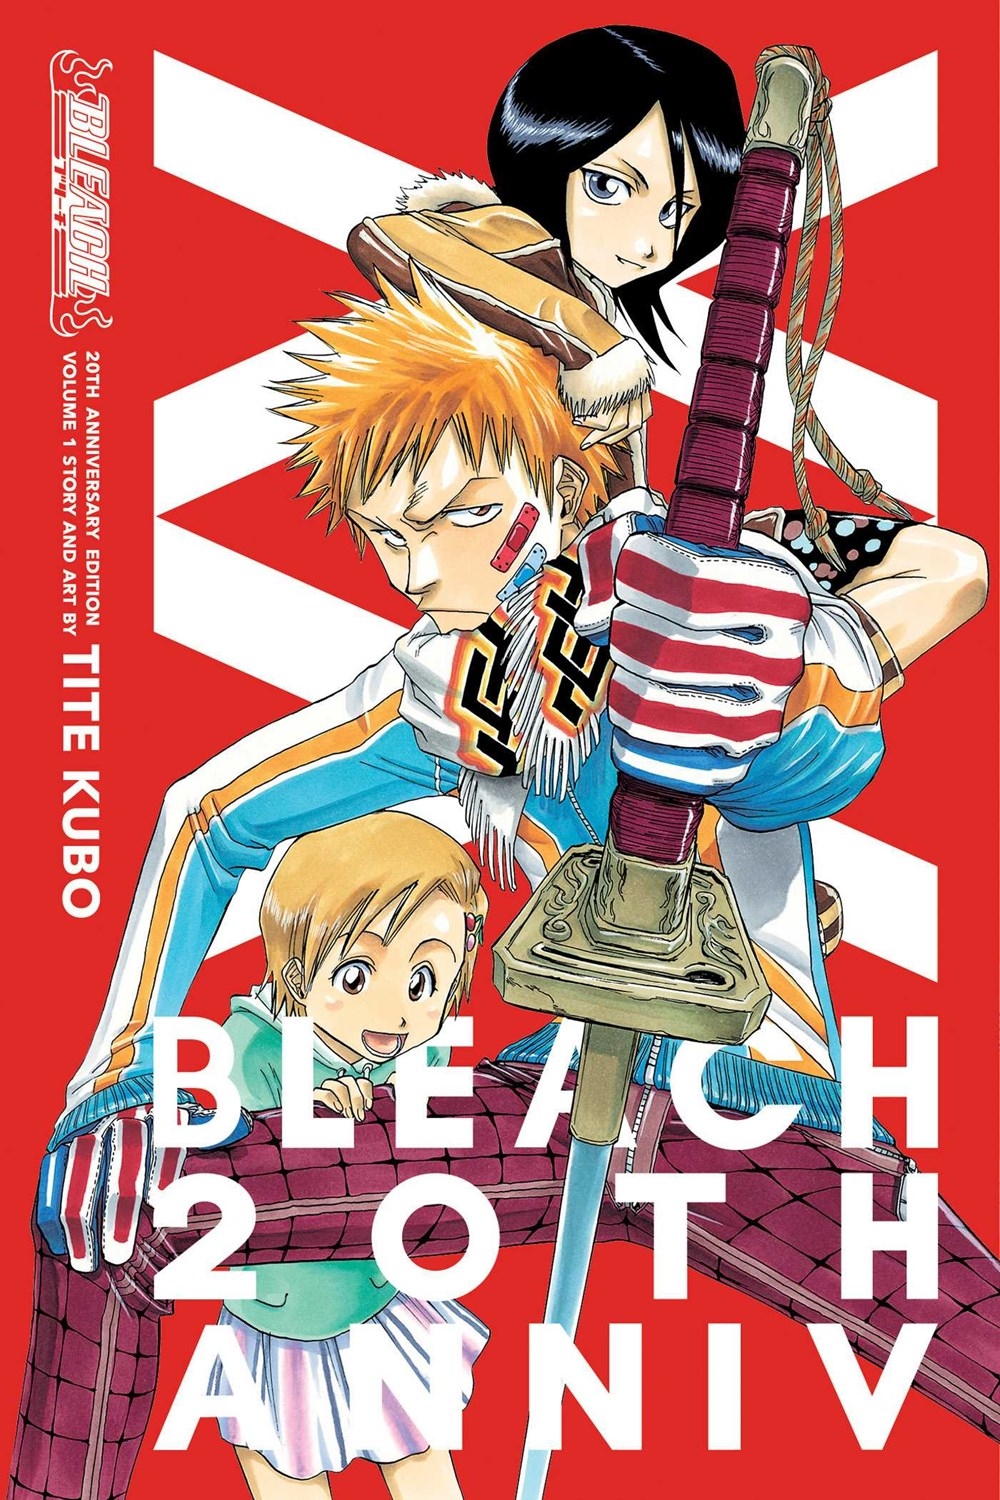 Bleach 20th Anniversary Graphic Novel Volume 1